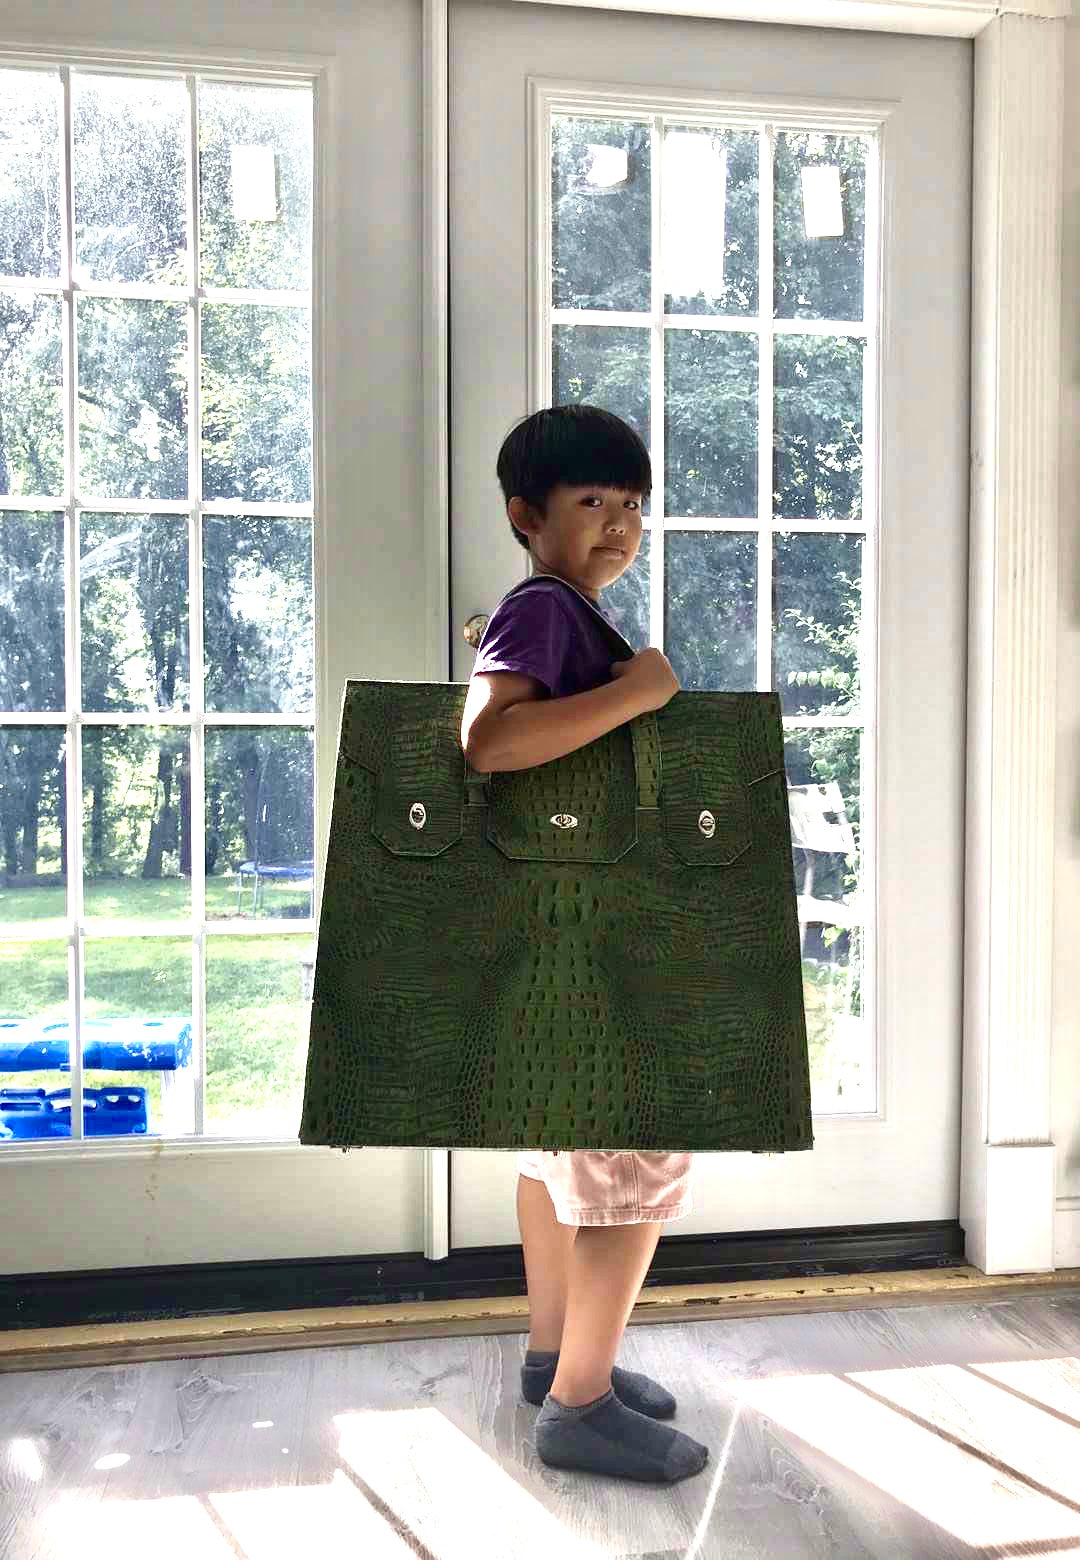 Large green crocodile birkin bag womens' tote bag——My Whole World